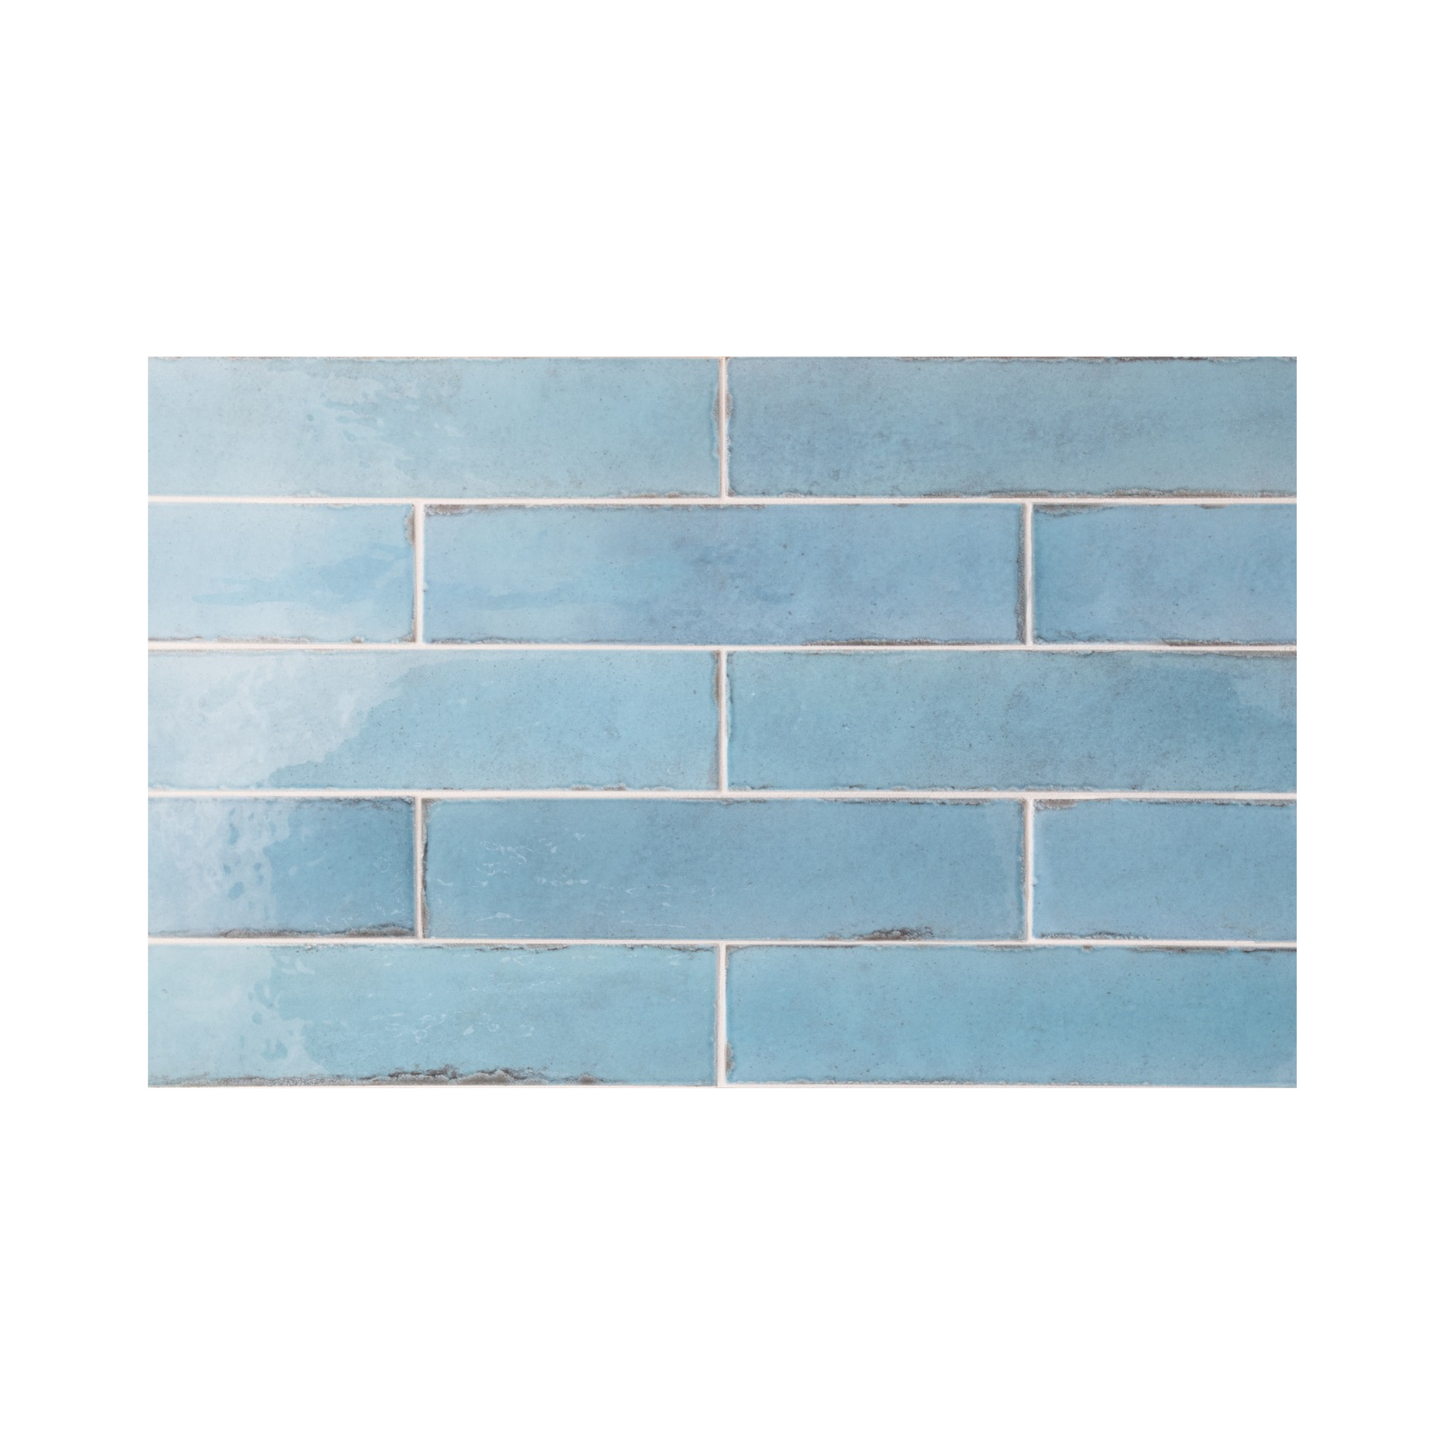 Hoxton Topaz Blue Zellige Brick Tile